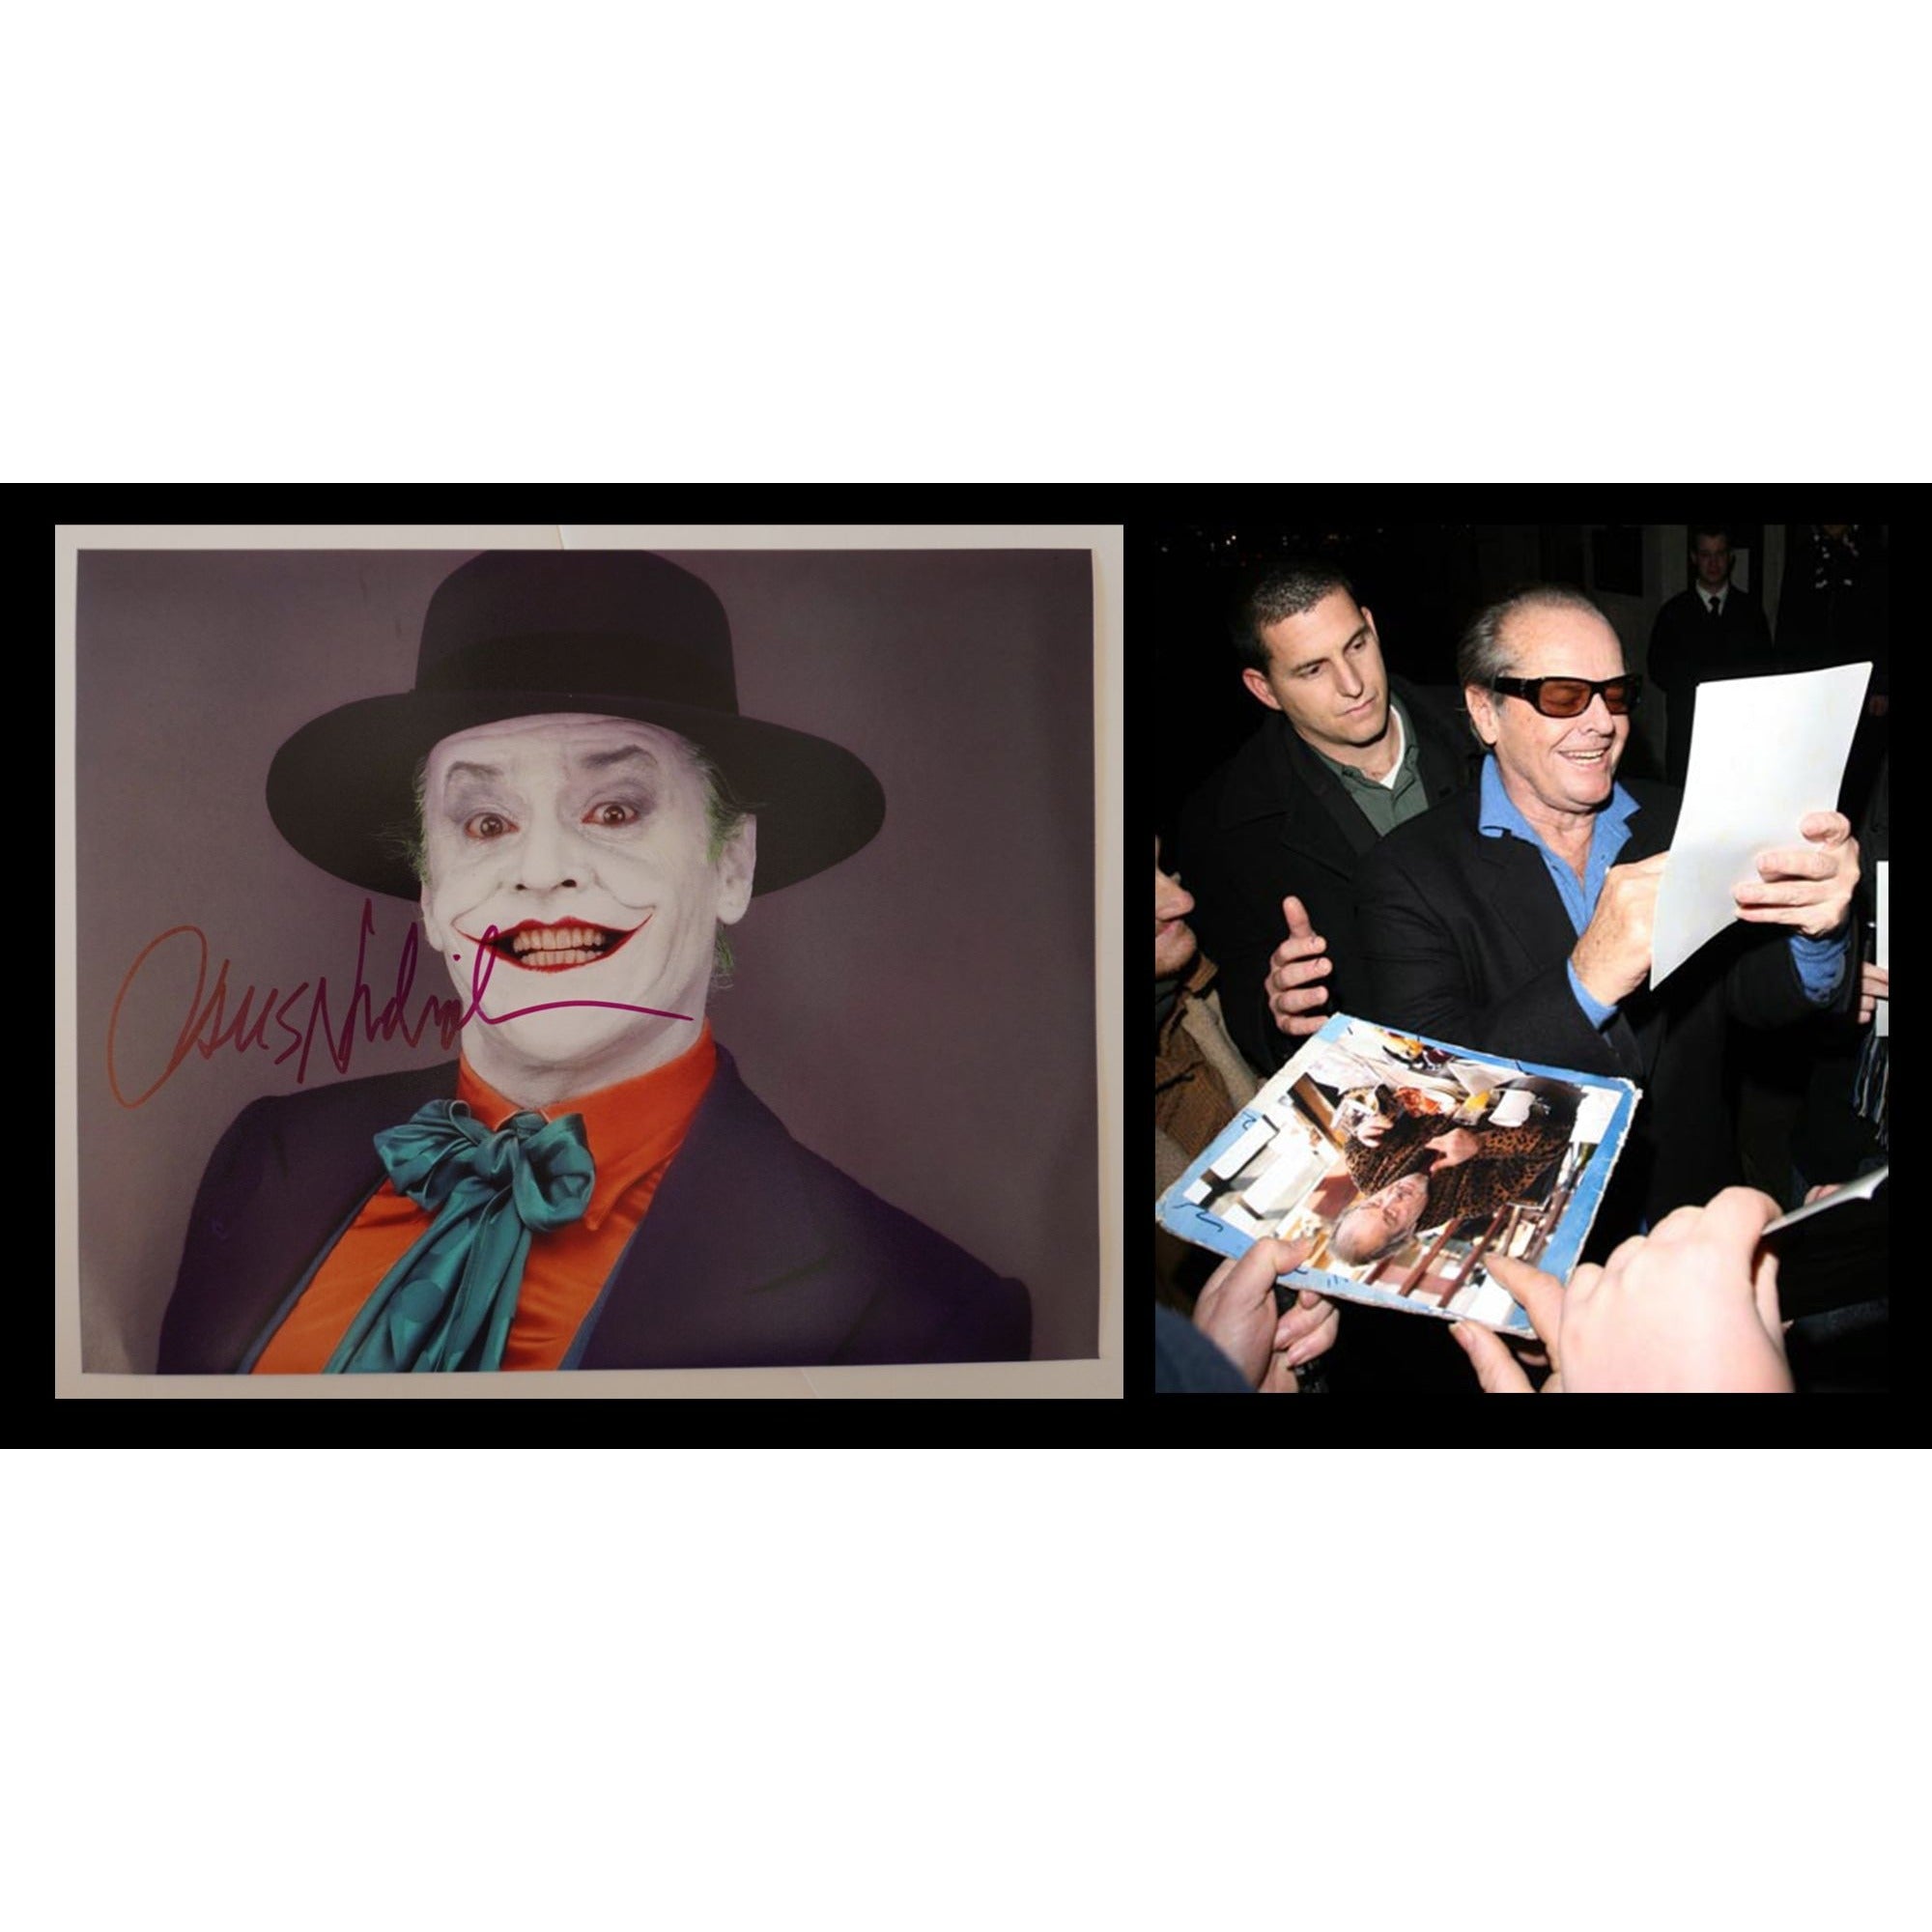 Jack Nicholson Joker 8 x 10 signed photo with proof